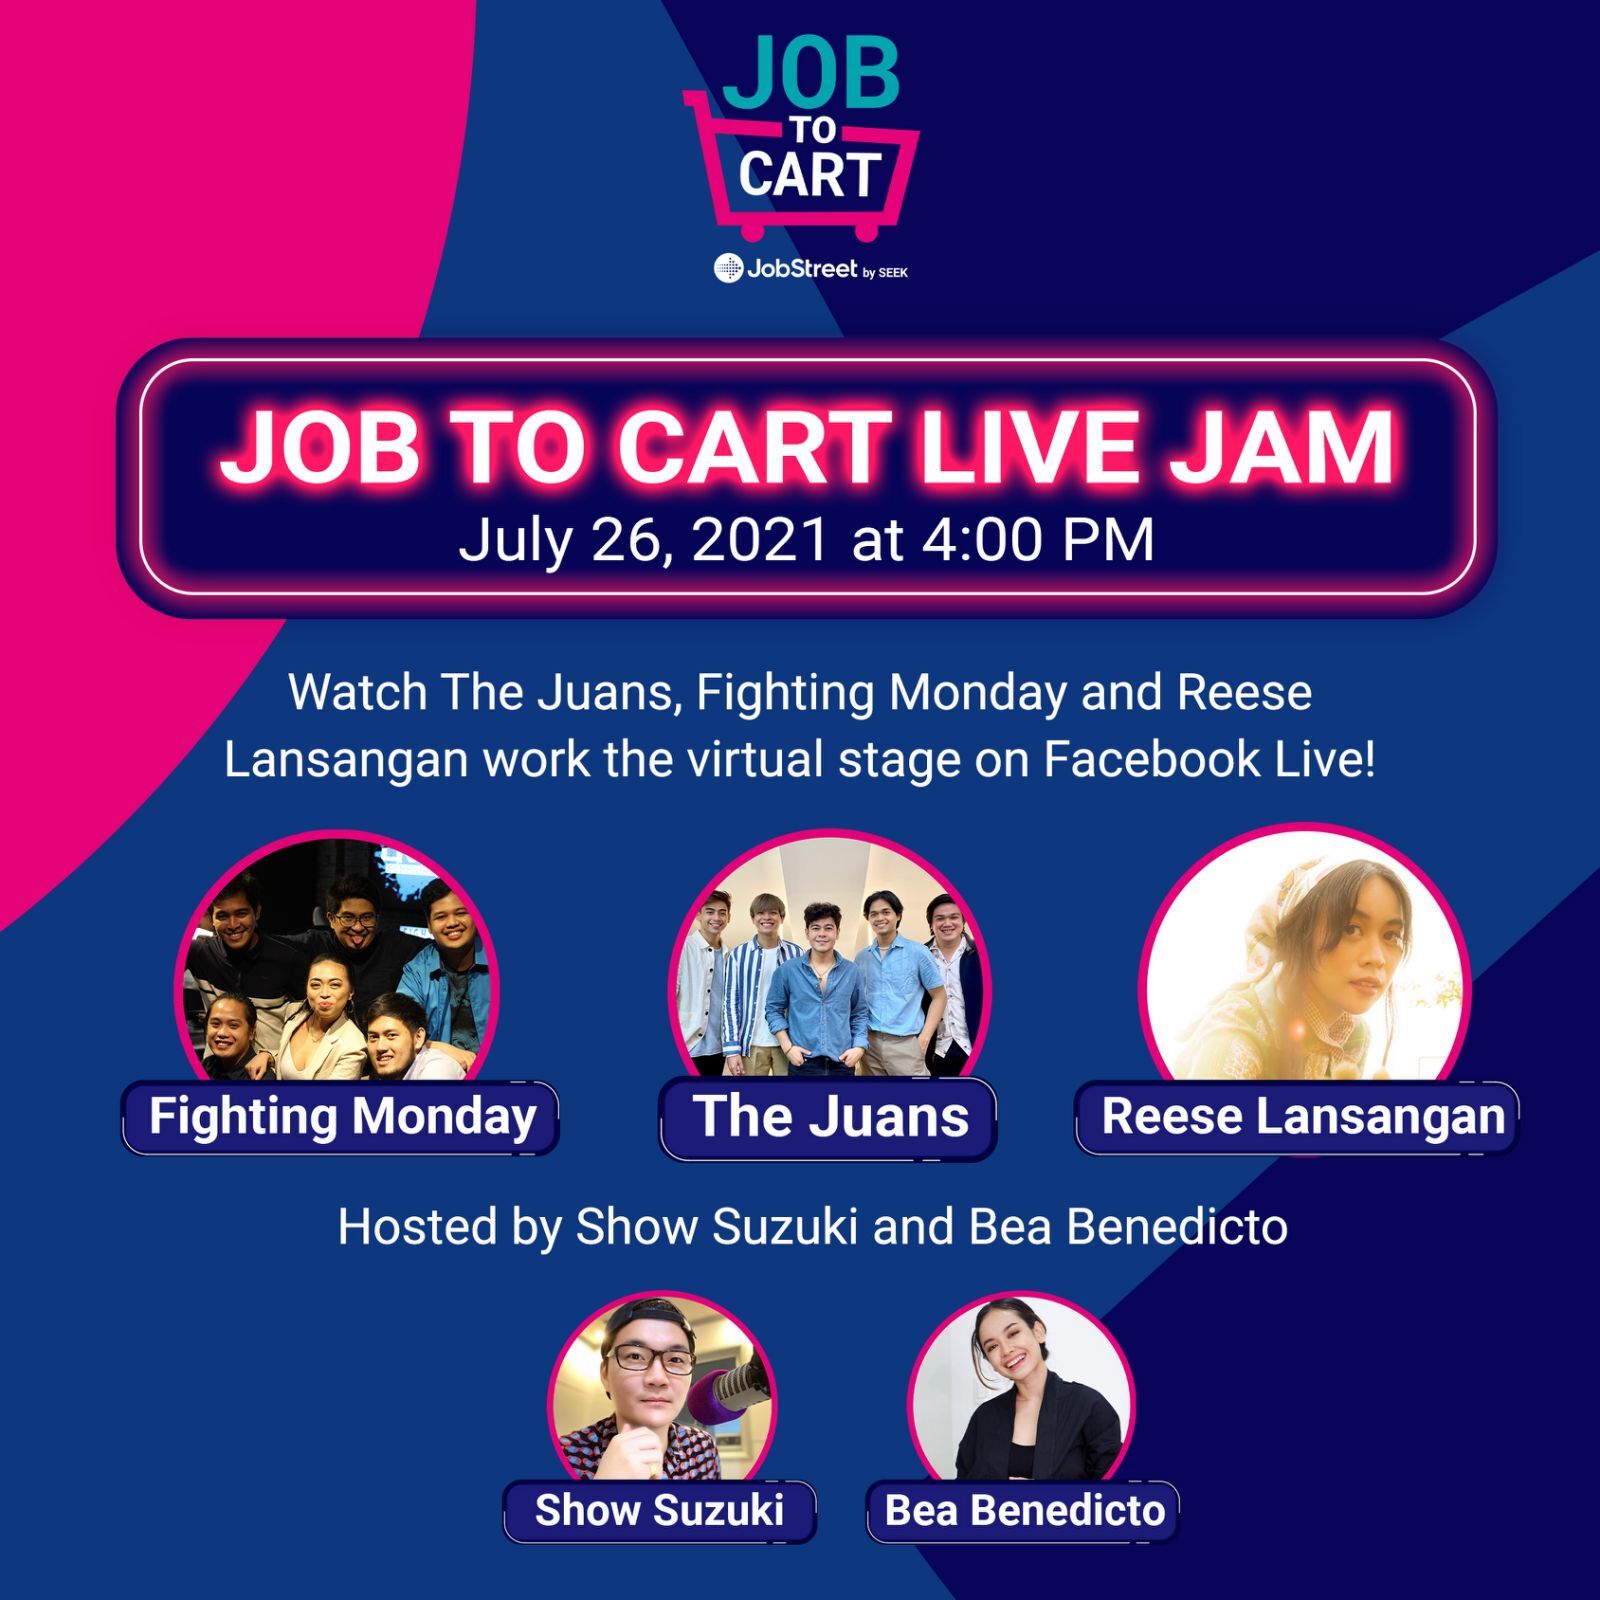 ComCo Southeast Asia - New PR Smart Social - Job to Cart - Jobstreet